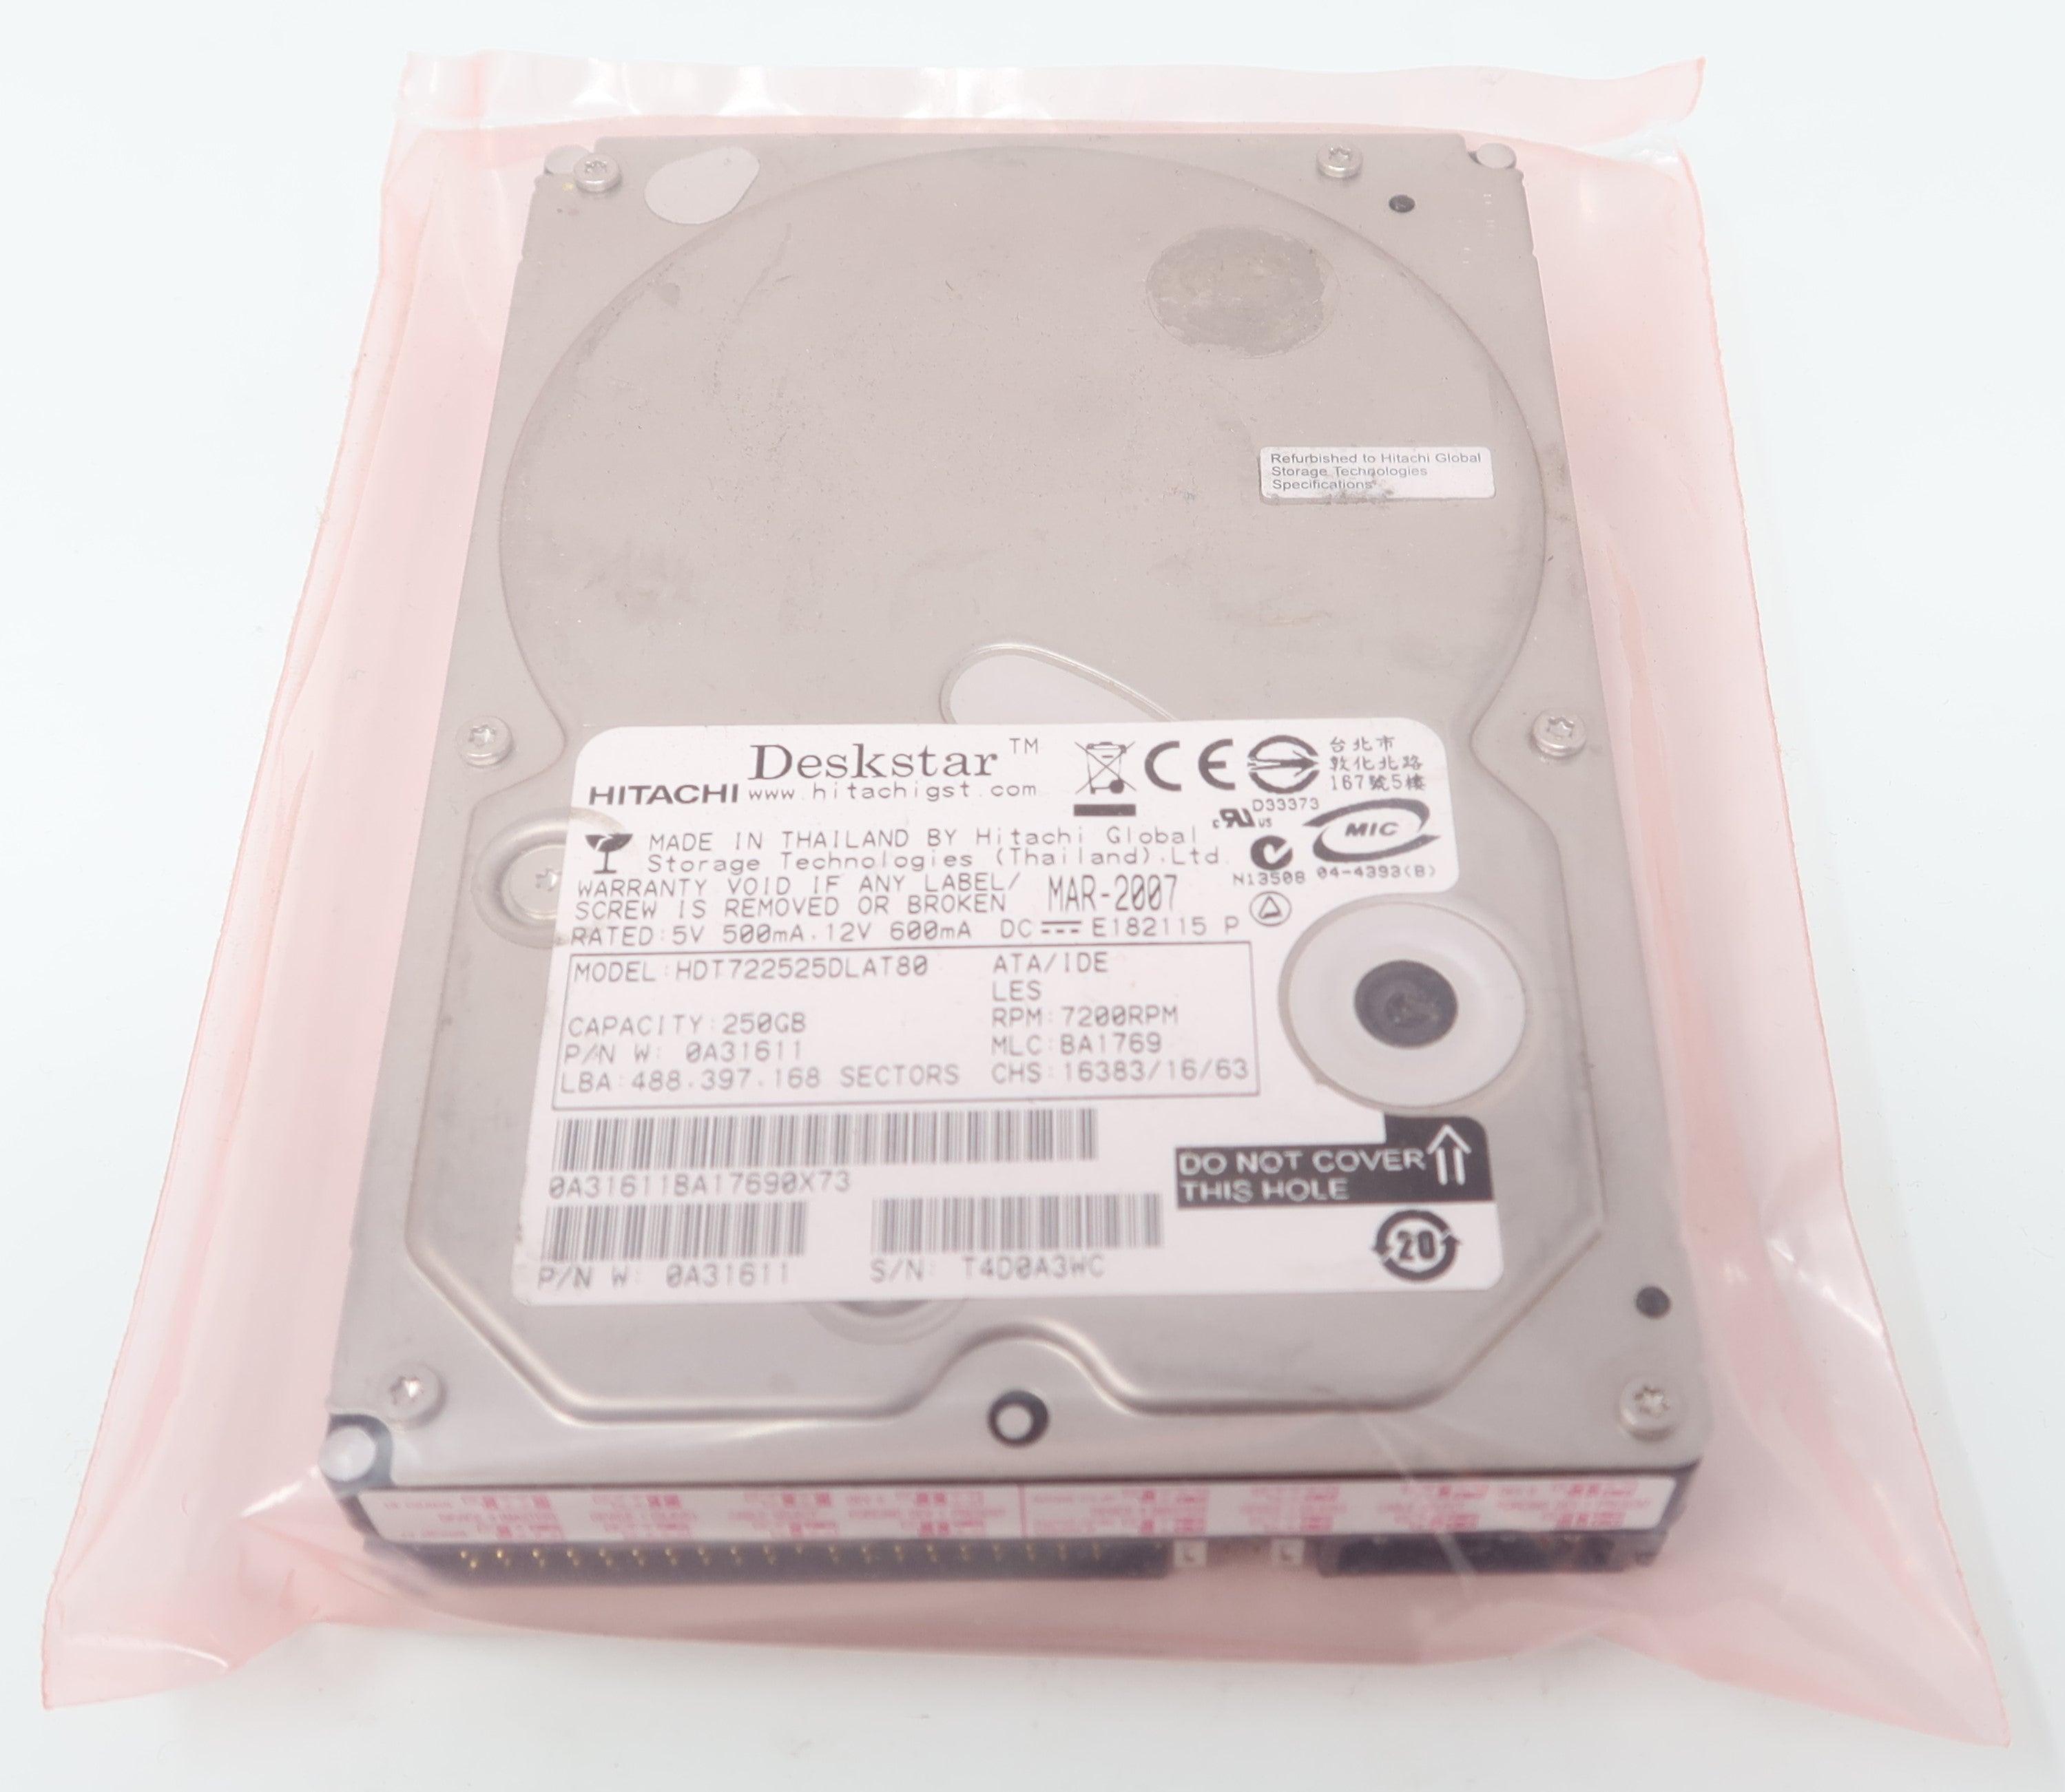 HDT722525DLAT80 Hitachi Deskstar 250GB IDE 3.5in Hard Drive